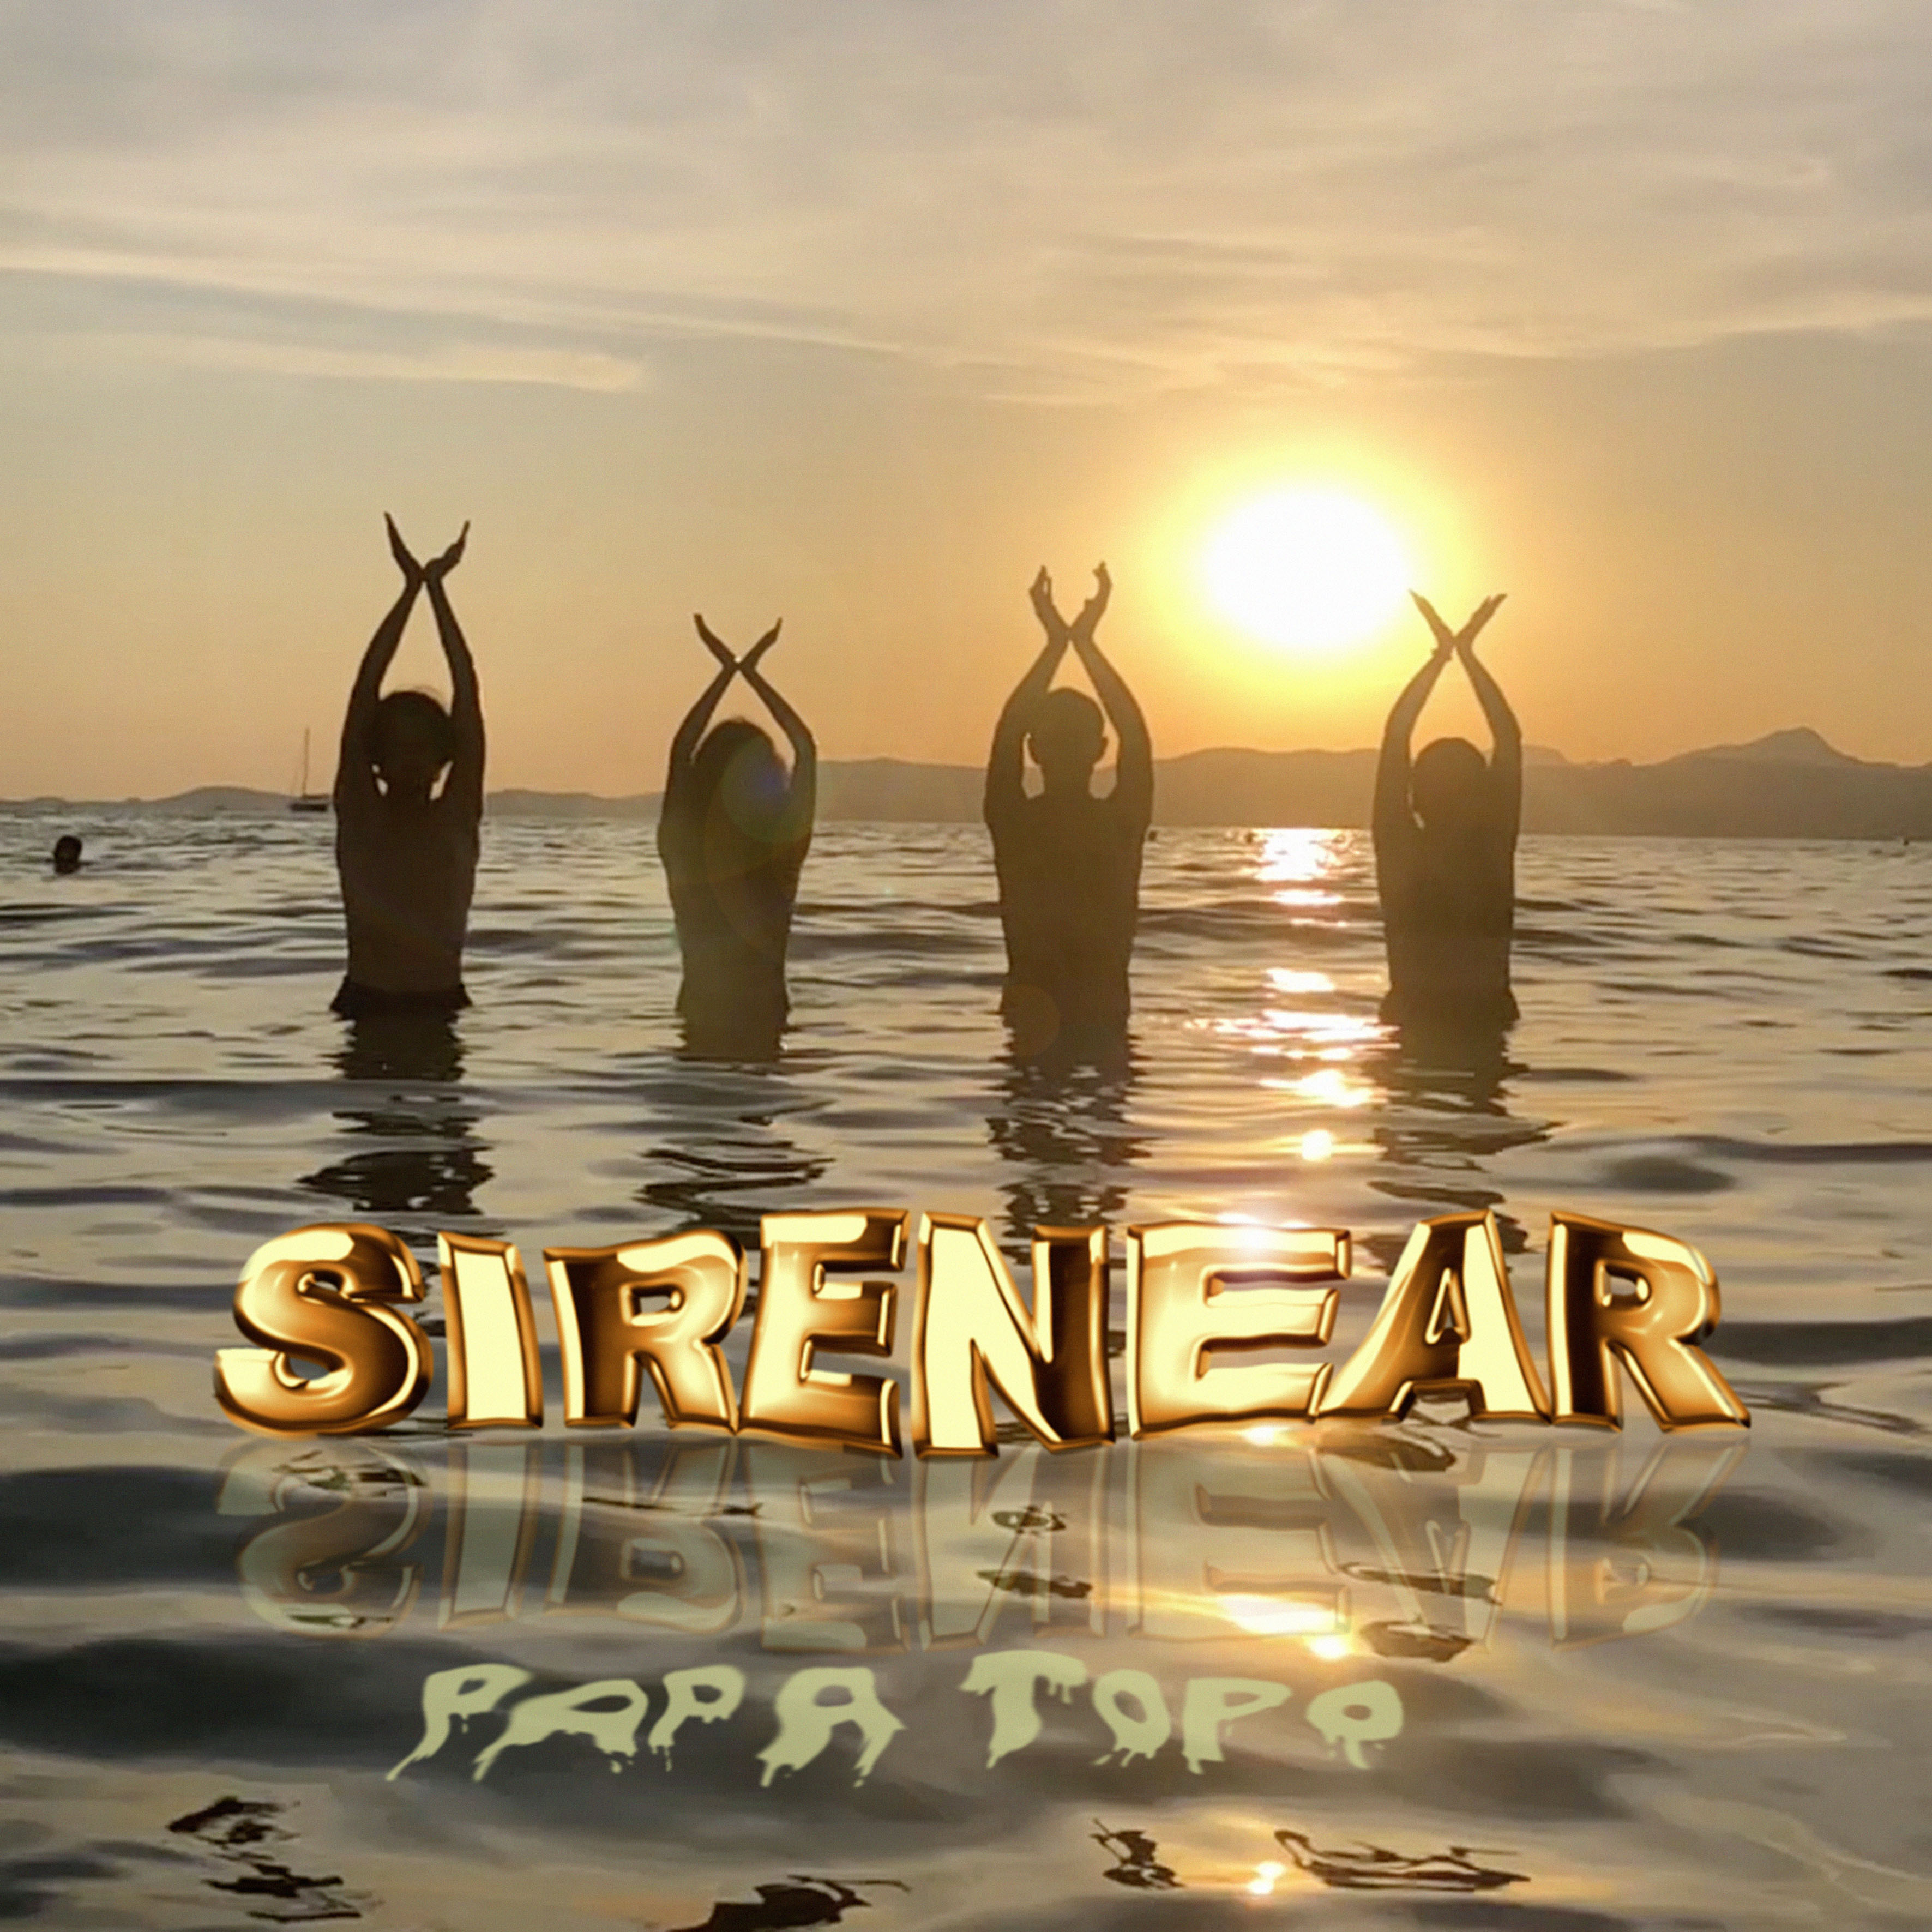 Papa Topo "Sirenear" Single Digital